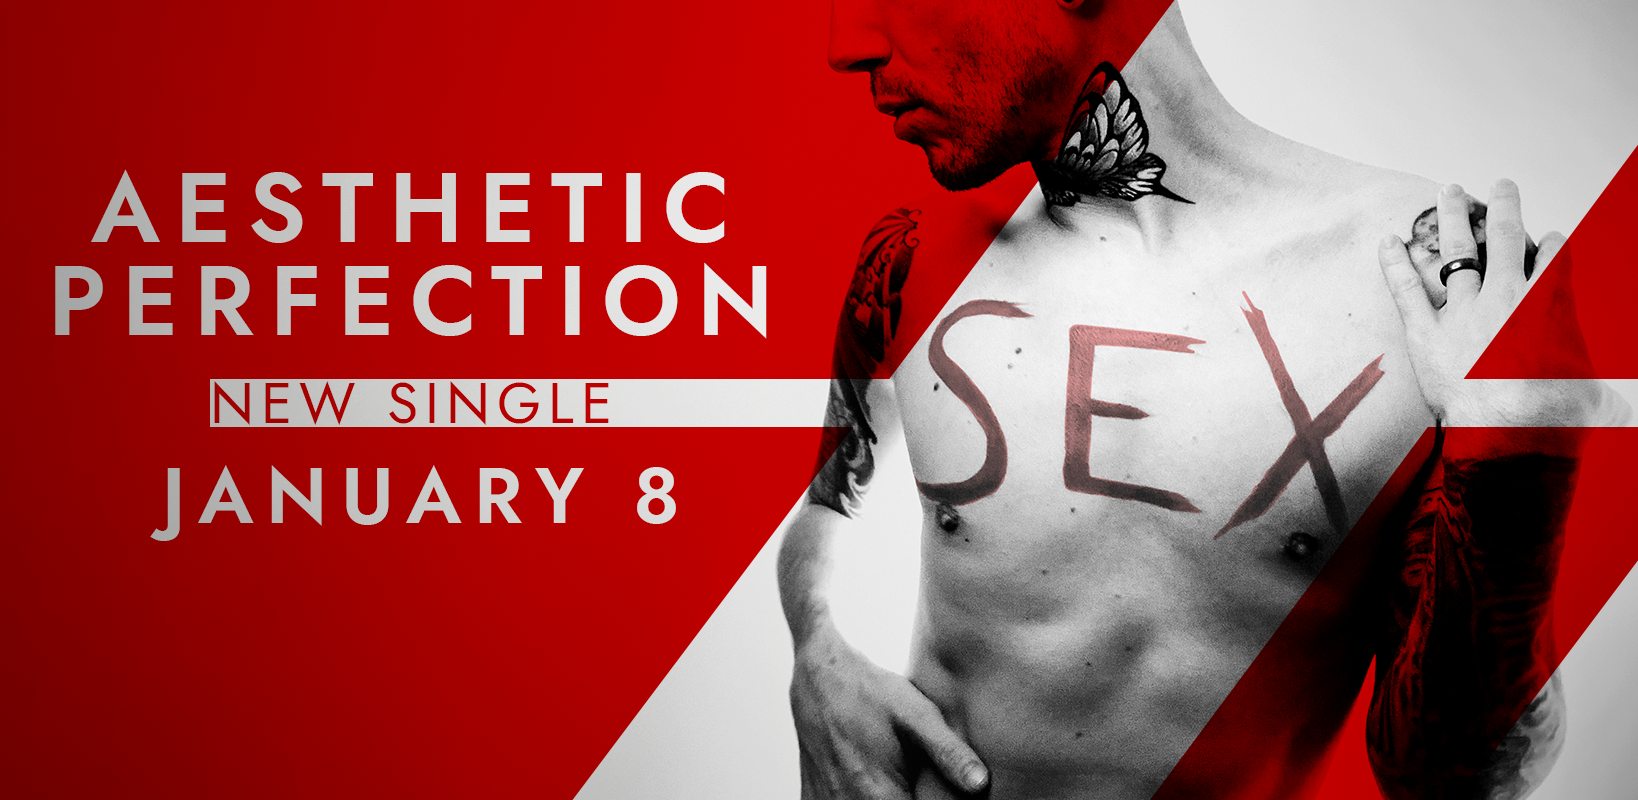 AESTHETIC PERFECTION - erste Single 2021: SEX